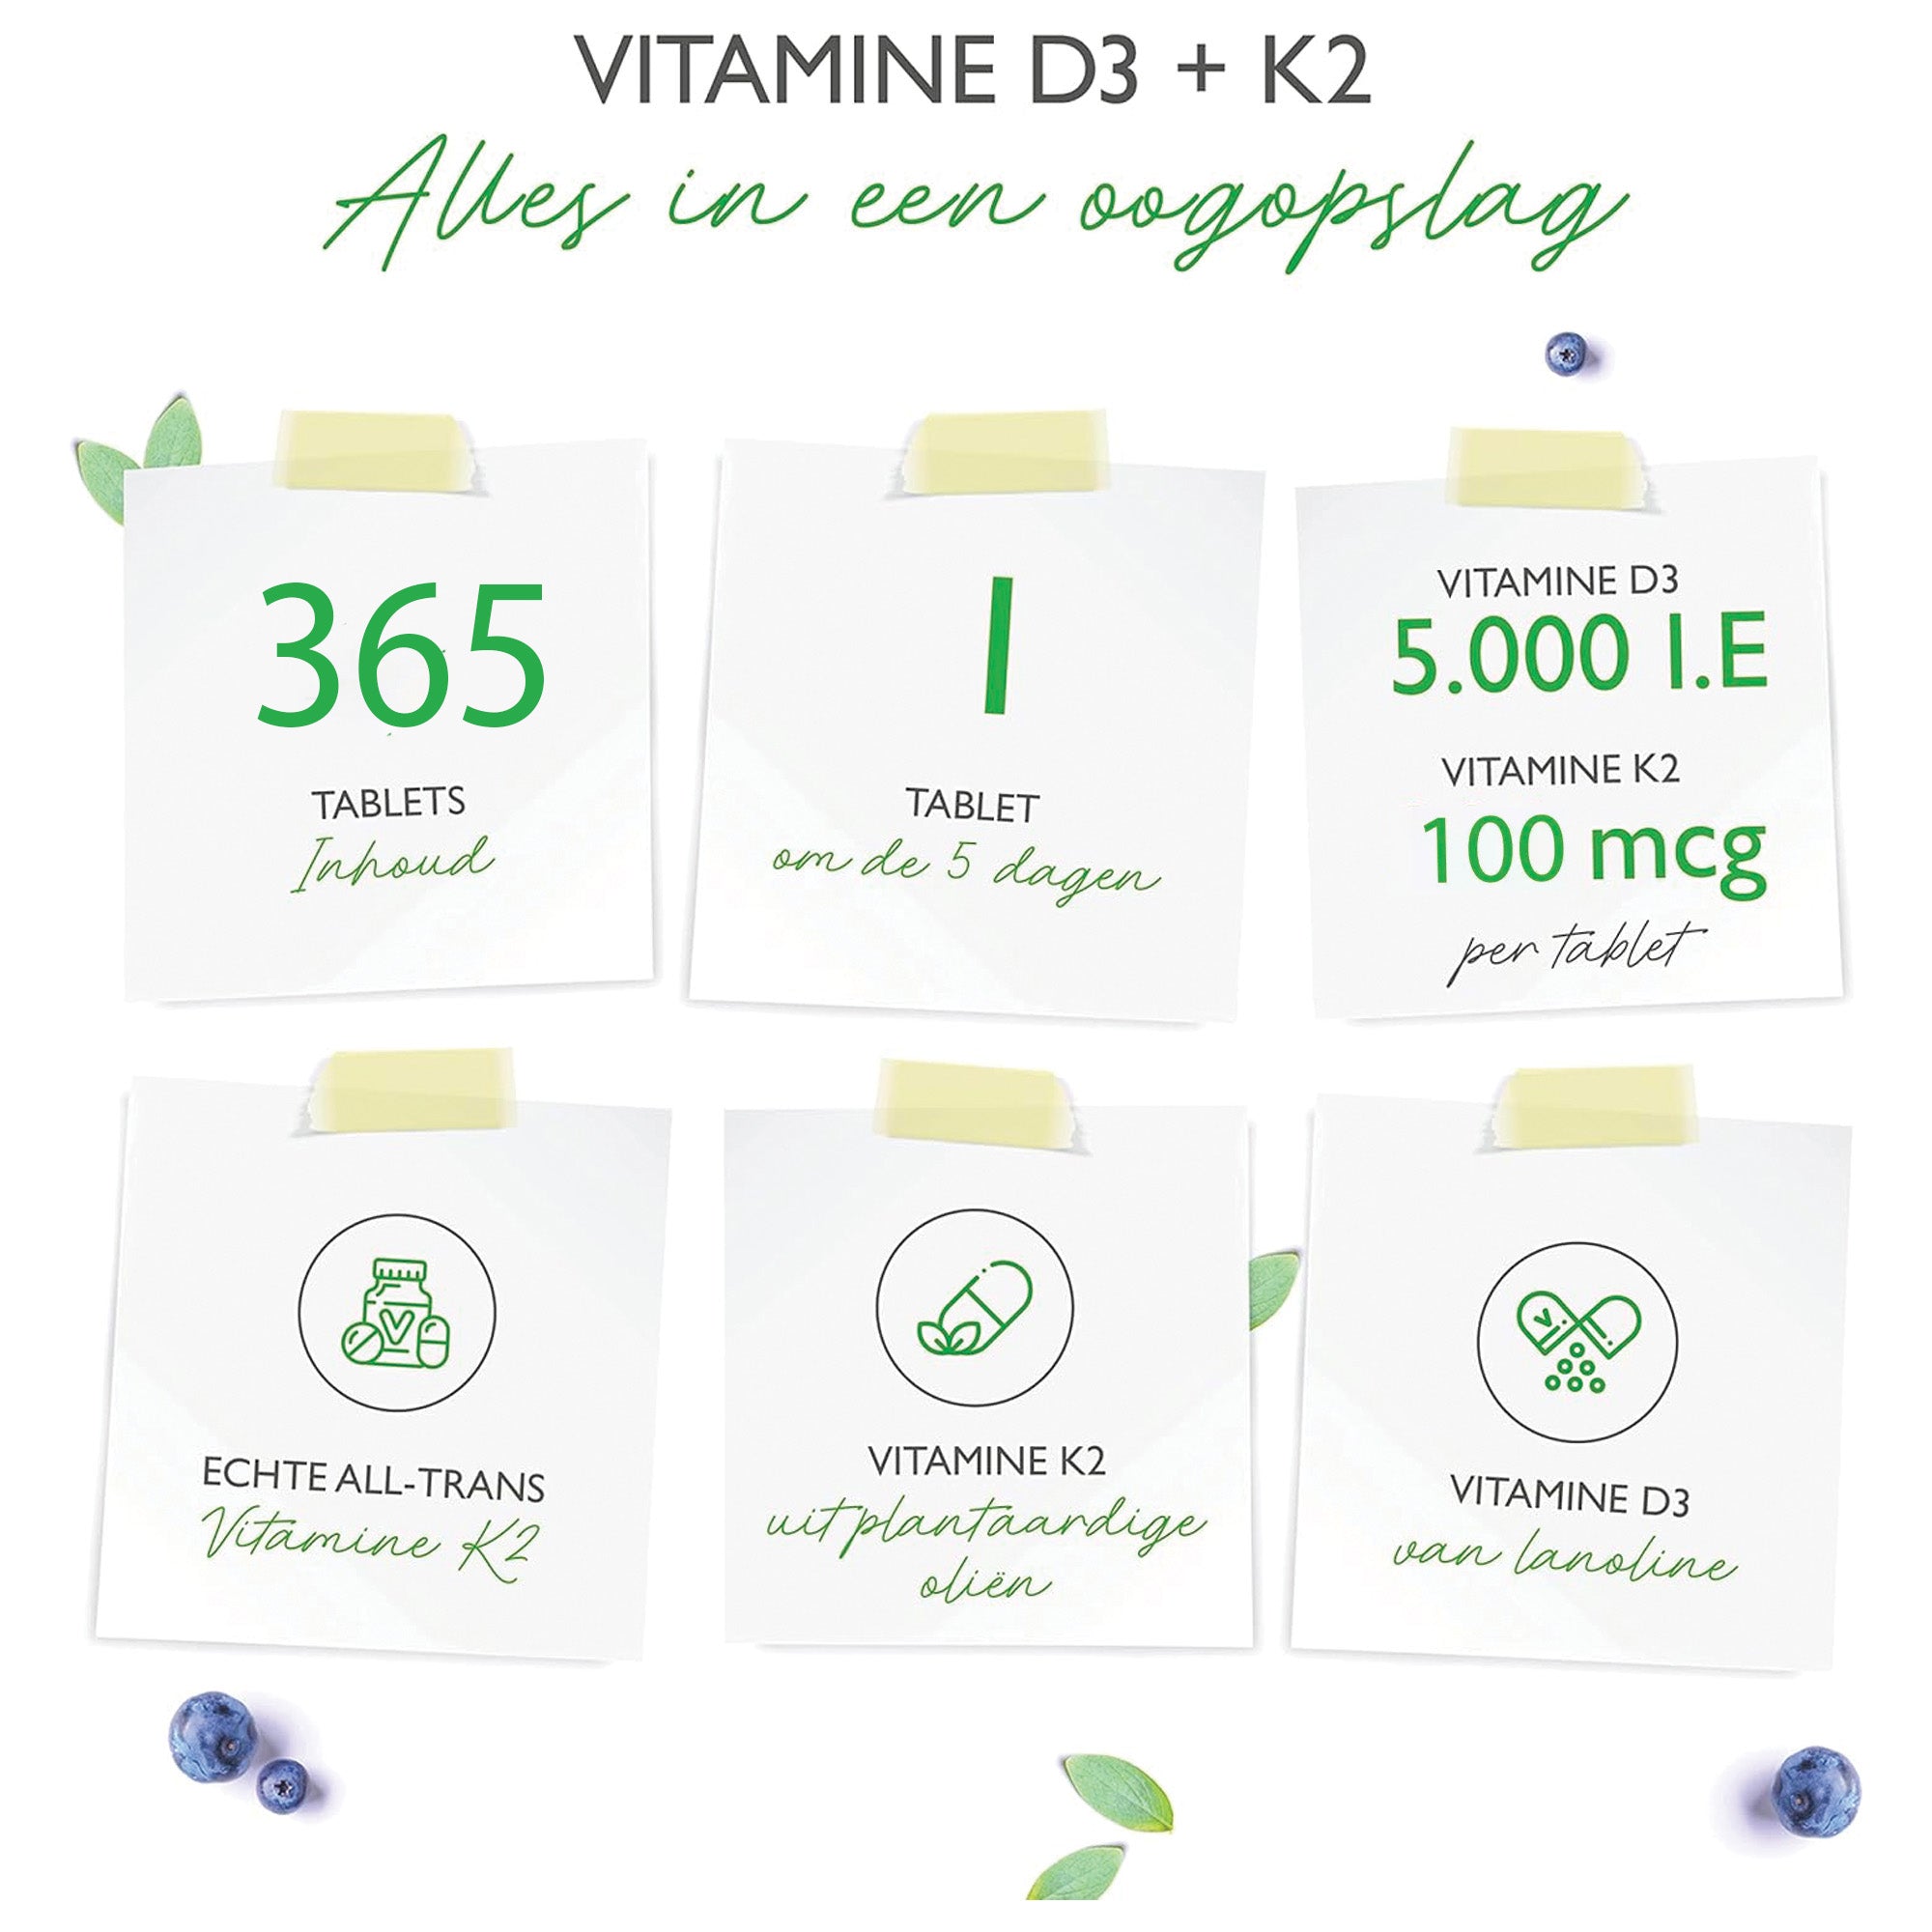 Vitamine D3 + K2 | 5.000 IE & 200UG | 365 Tabletten | Vit4ever